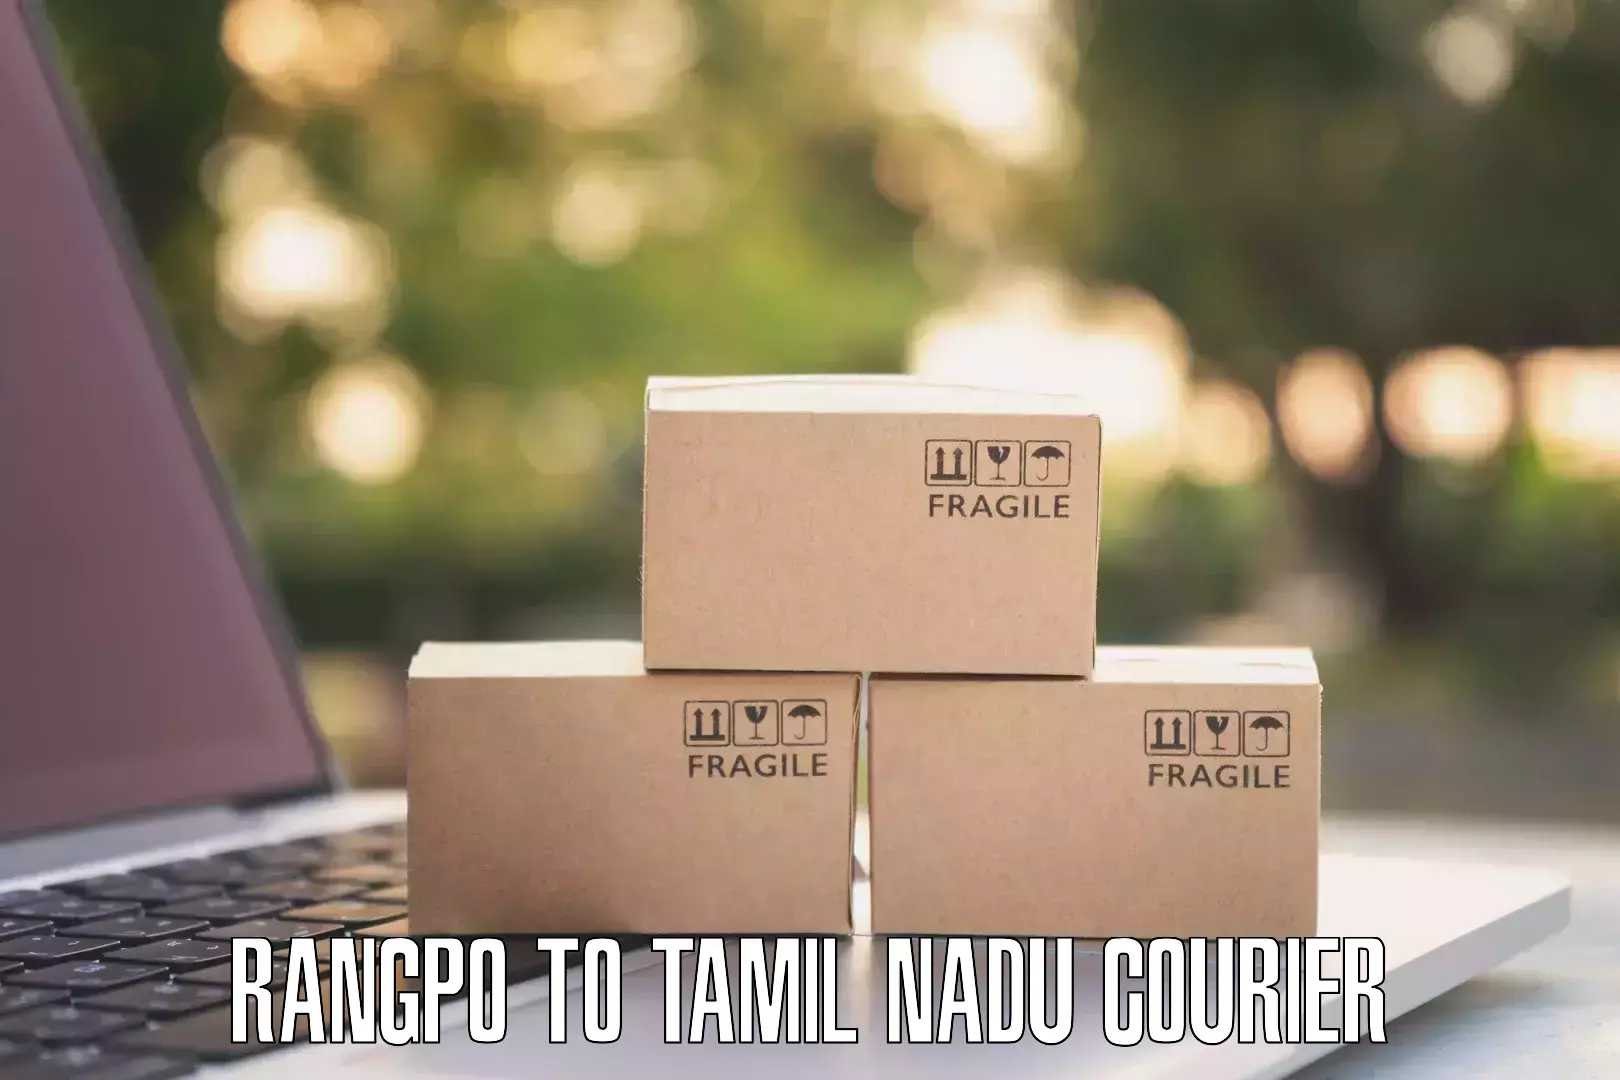 Express package handling Rangpo to Tamil Nadu